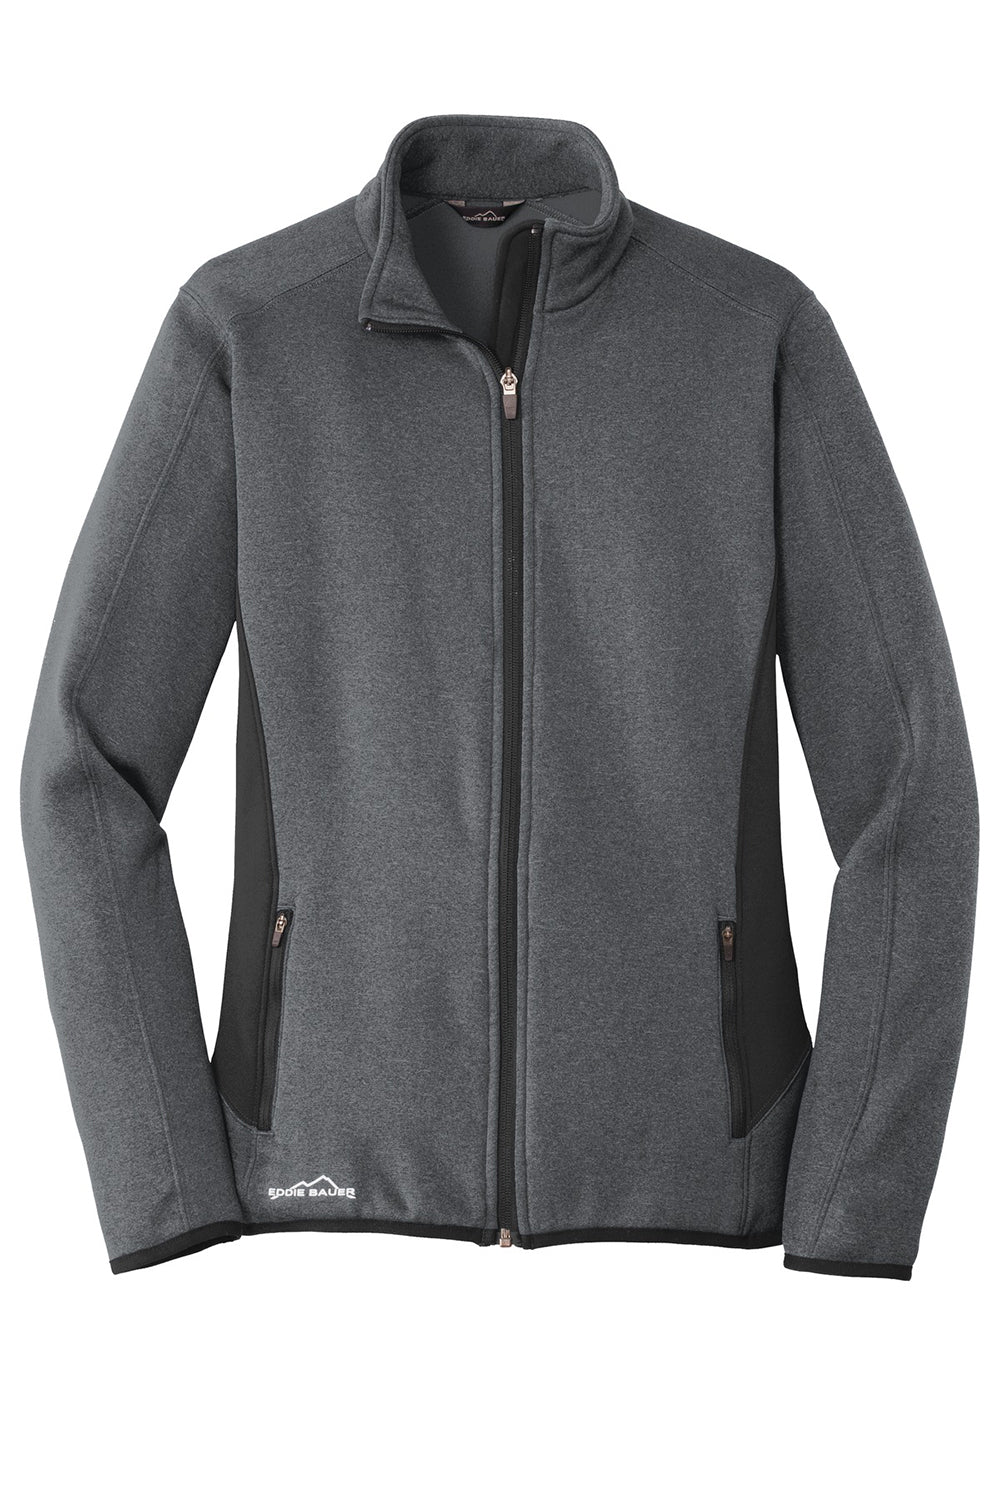 Eddie Bauer EB239 Womens Full Zip Fleece Jacket Heather Dark Charcoal Grey Flat Front